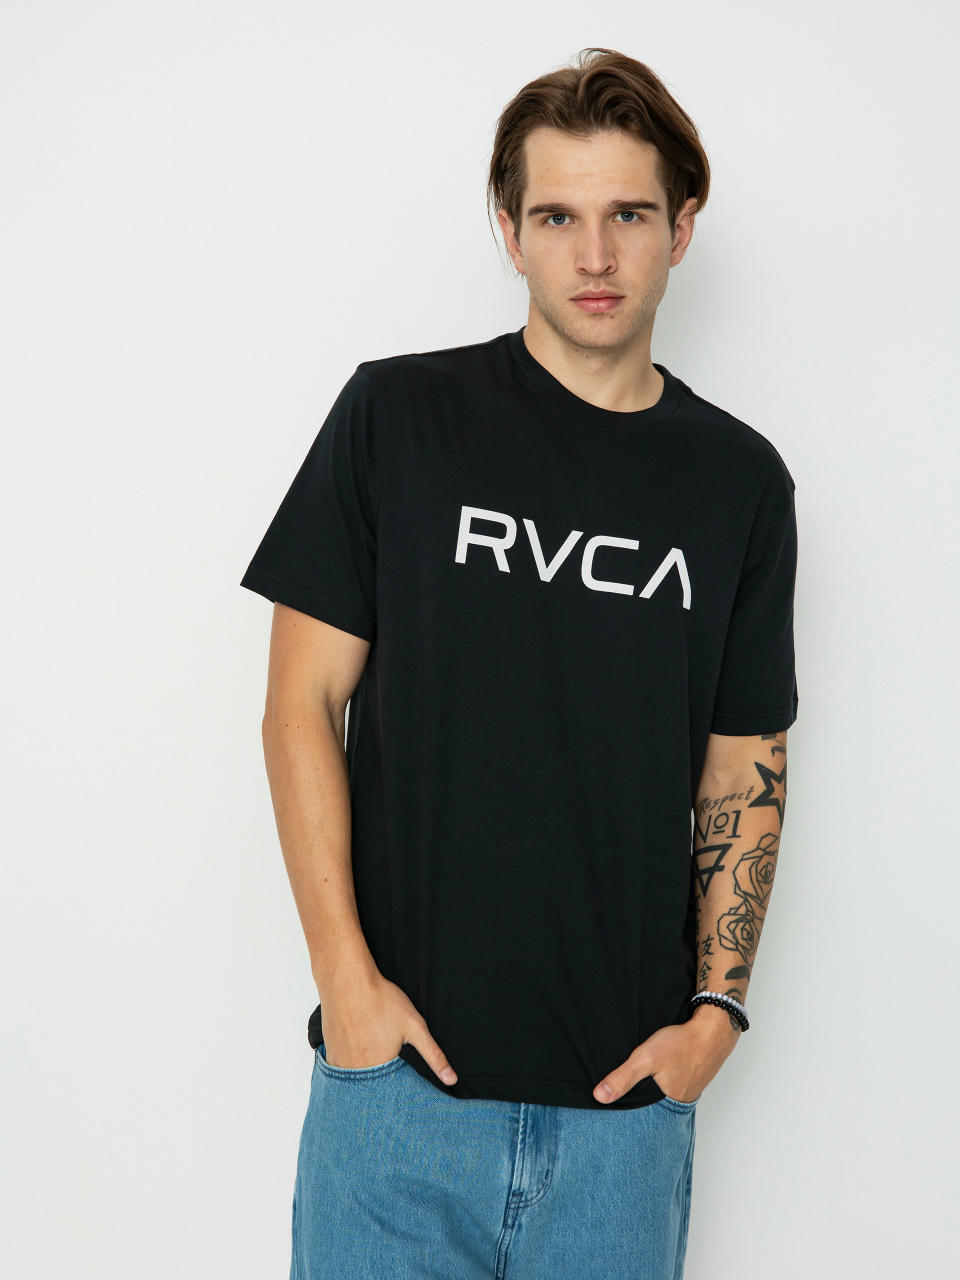 Tričko RVCA Big Rvca (black)